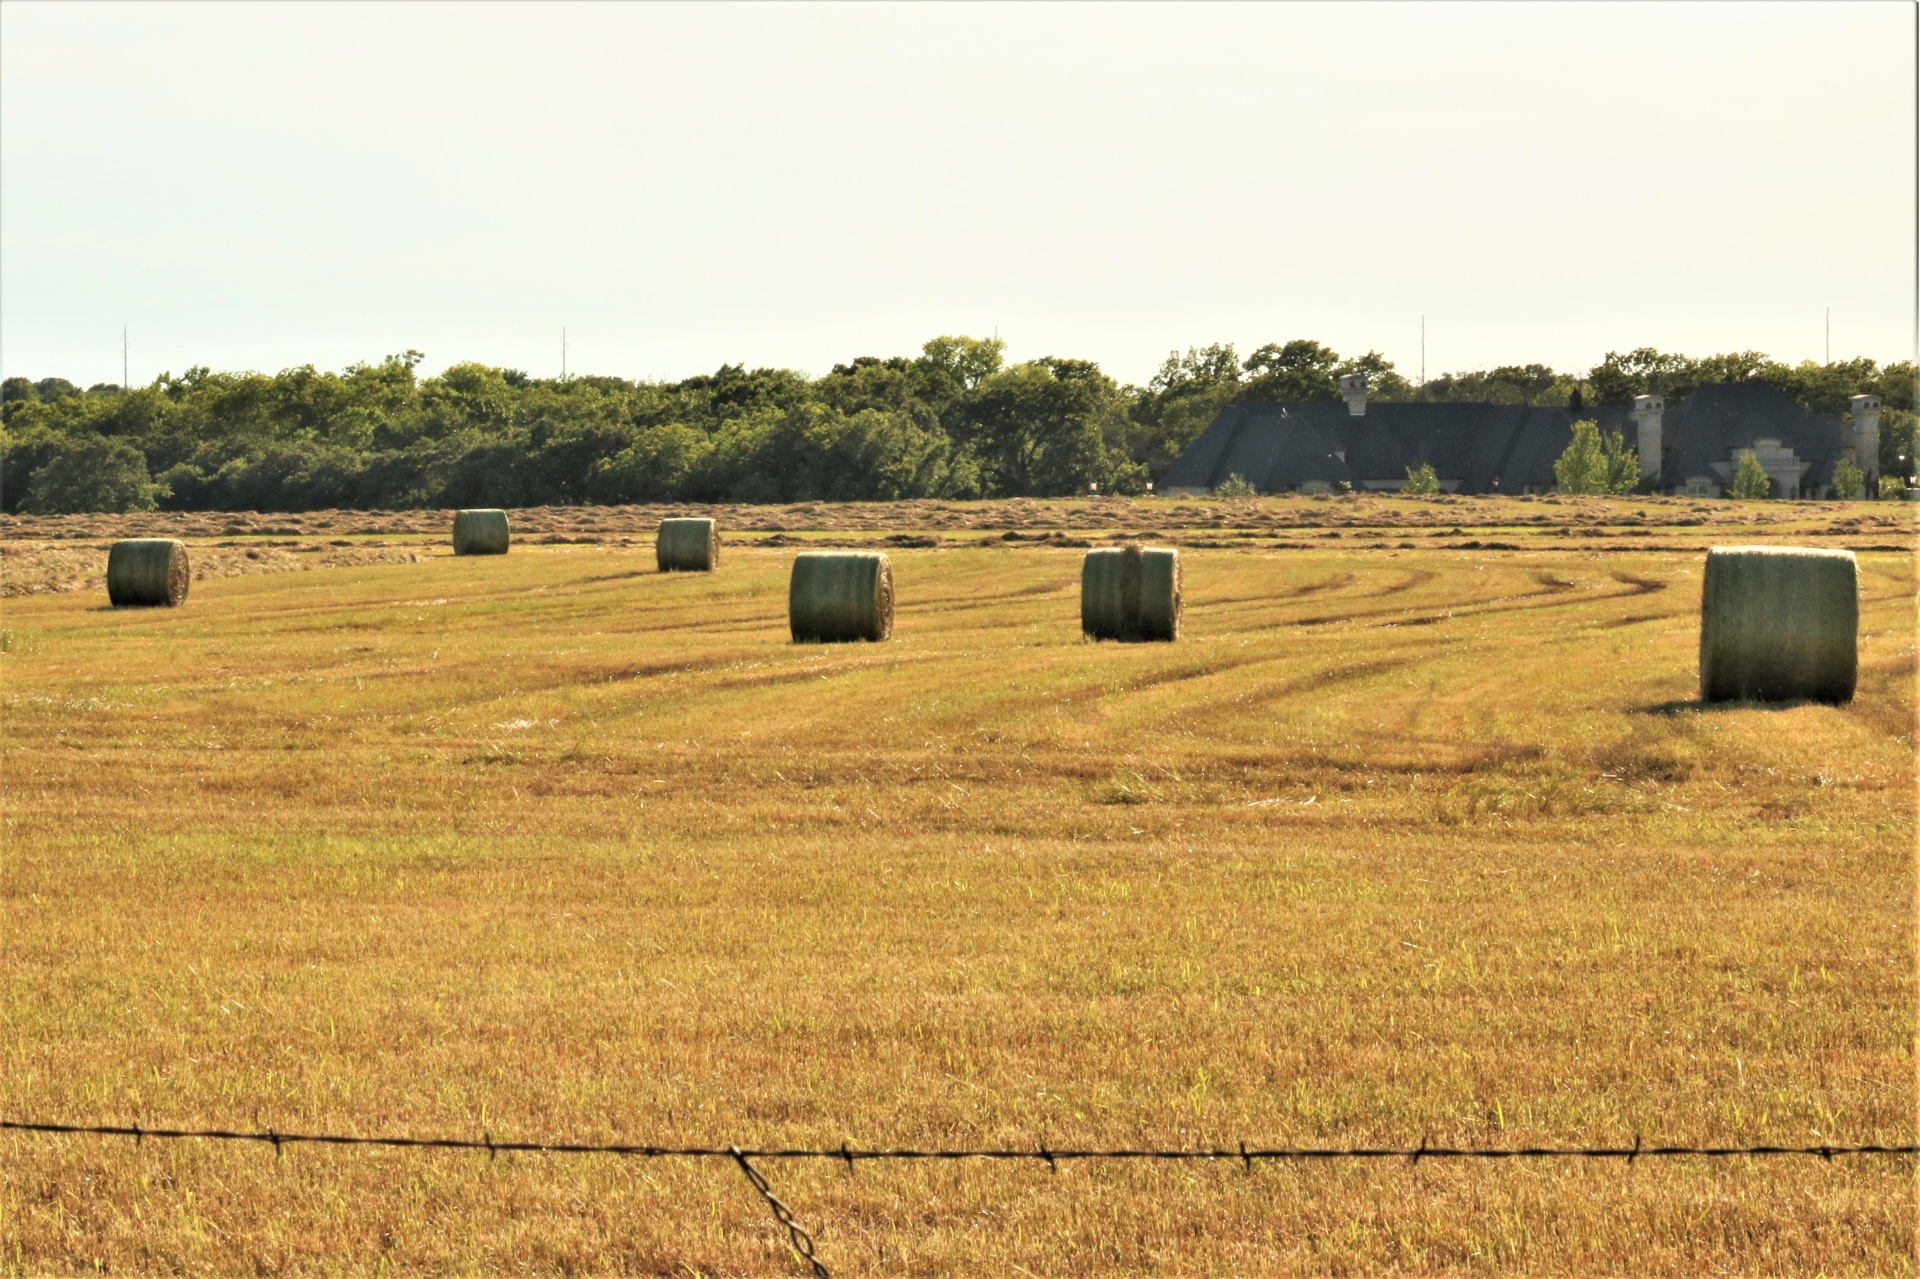 Round Hay Bales In Field